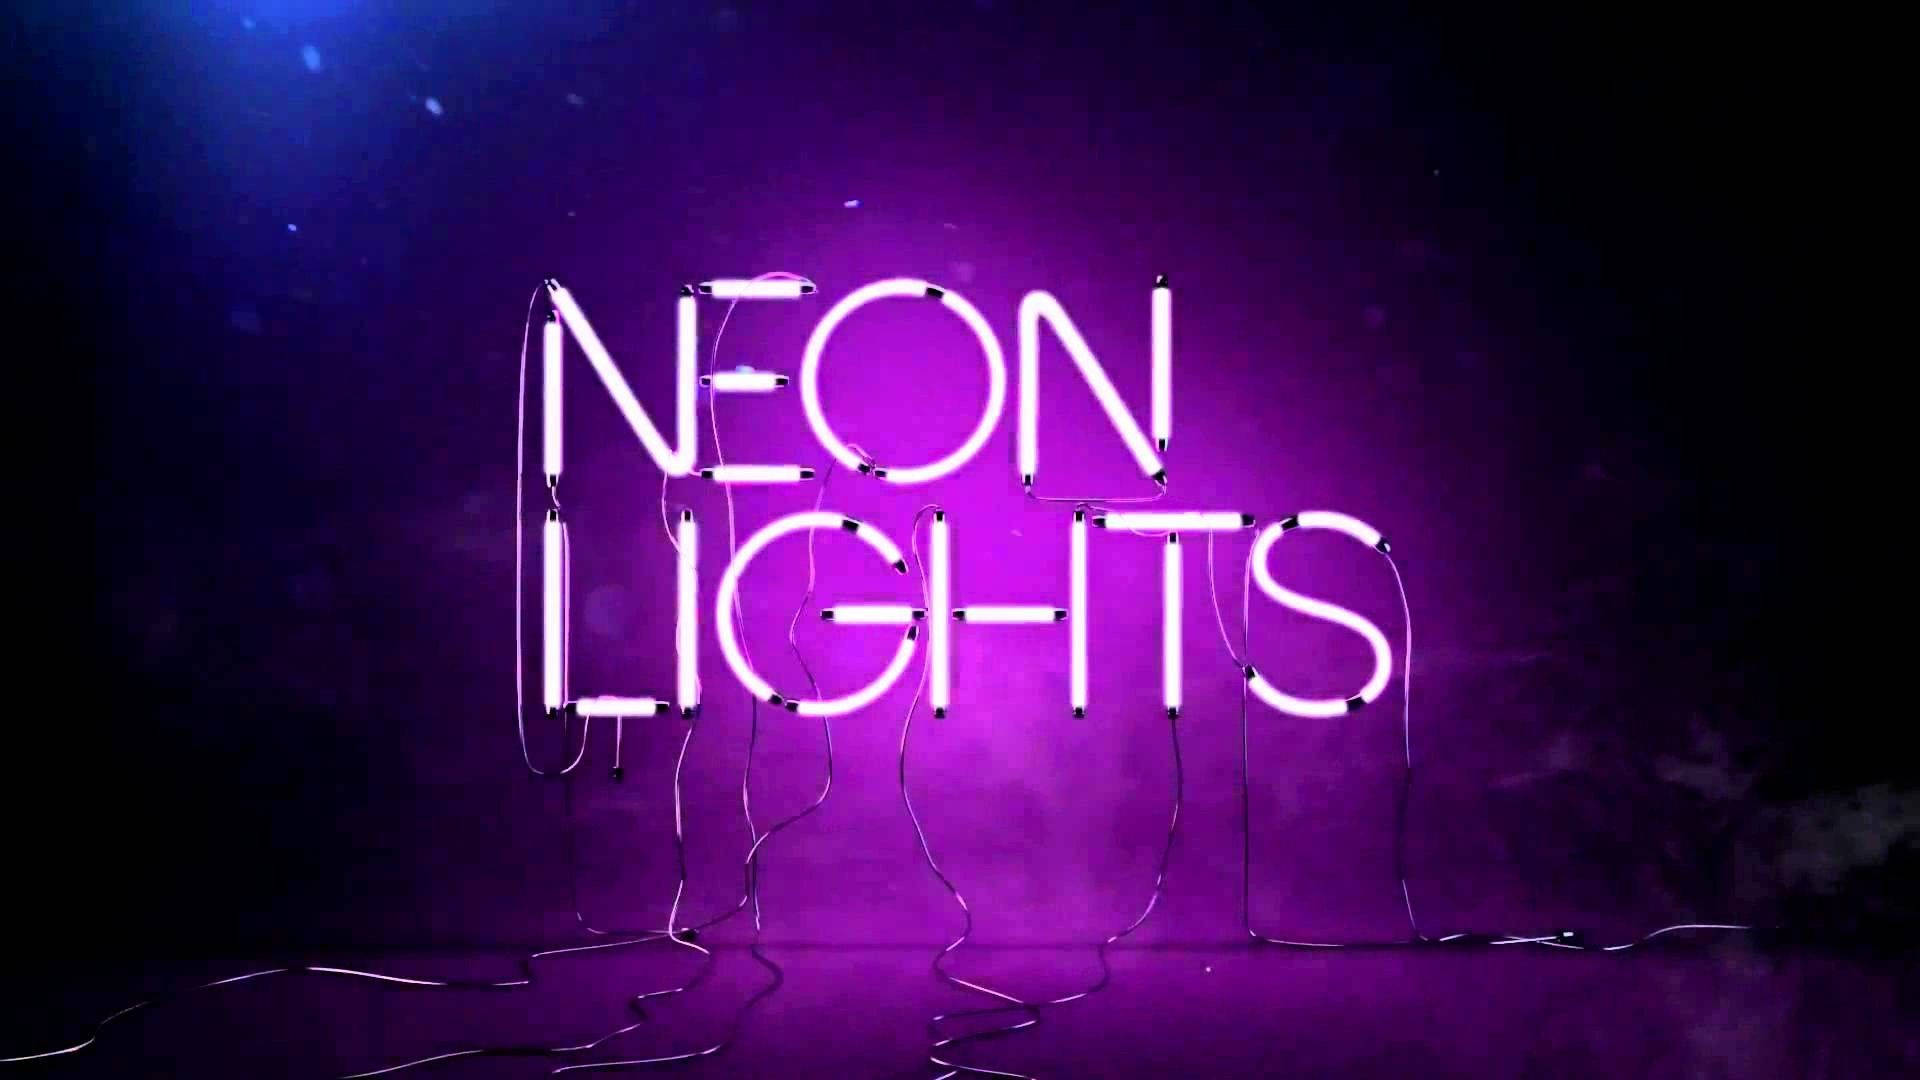 Violet Neon Light Signs Background